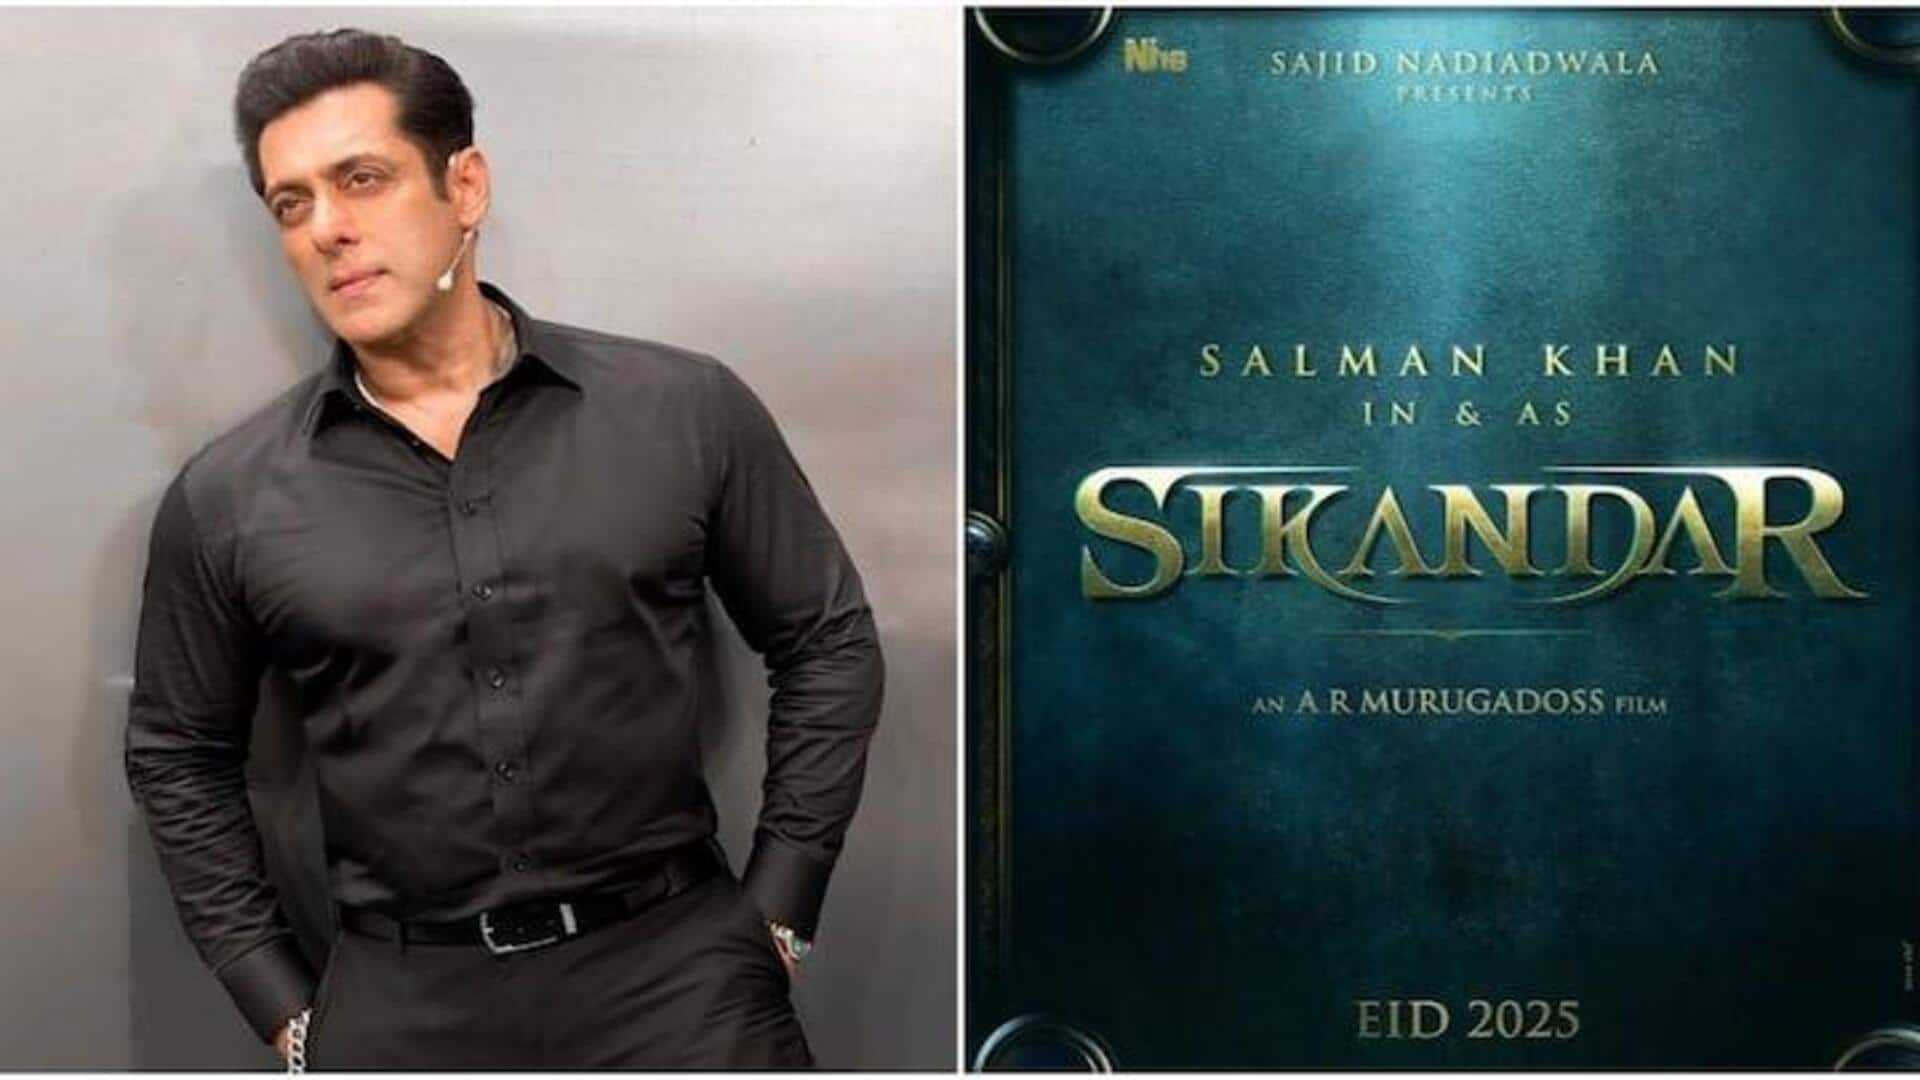 Salman Khan to begin filming 'Sikandar' in May 